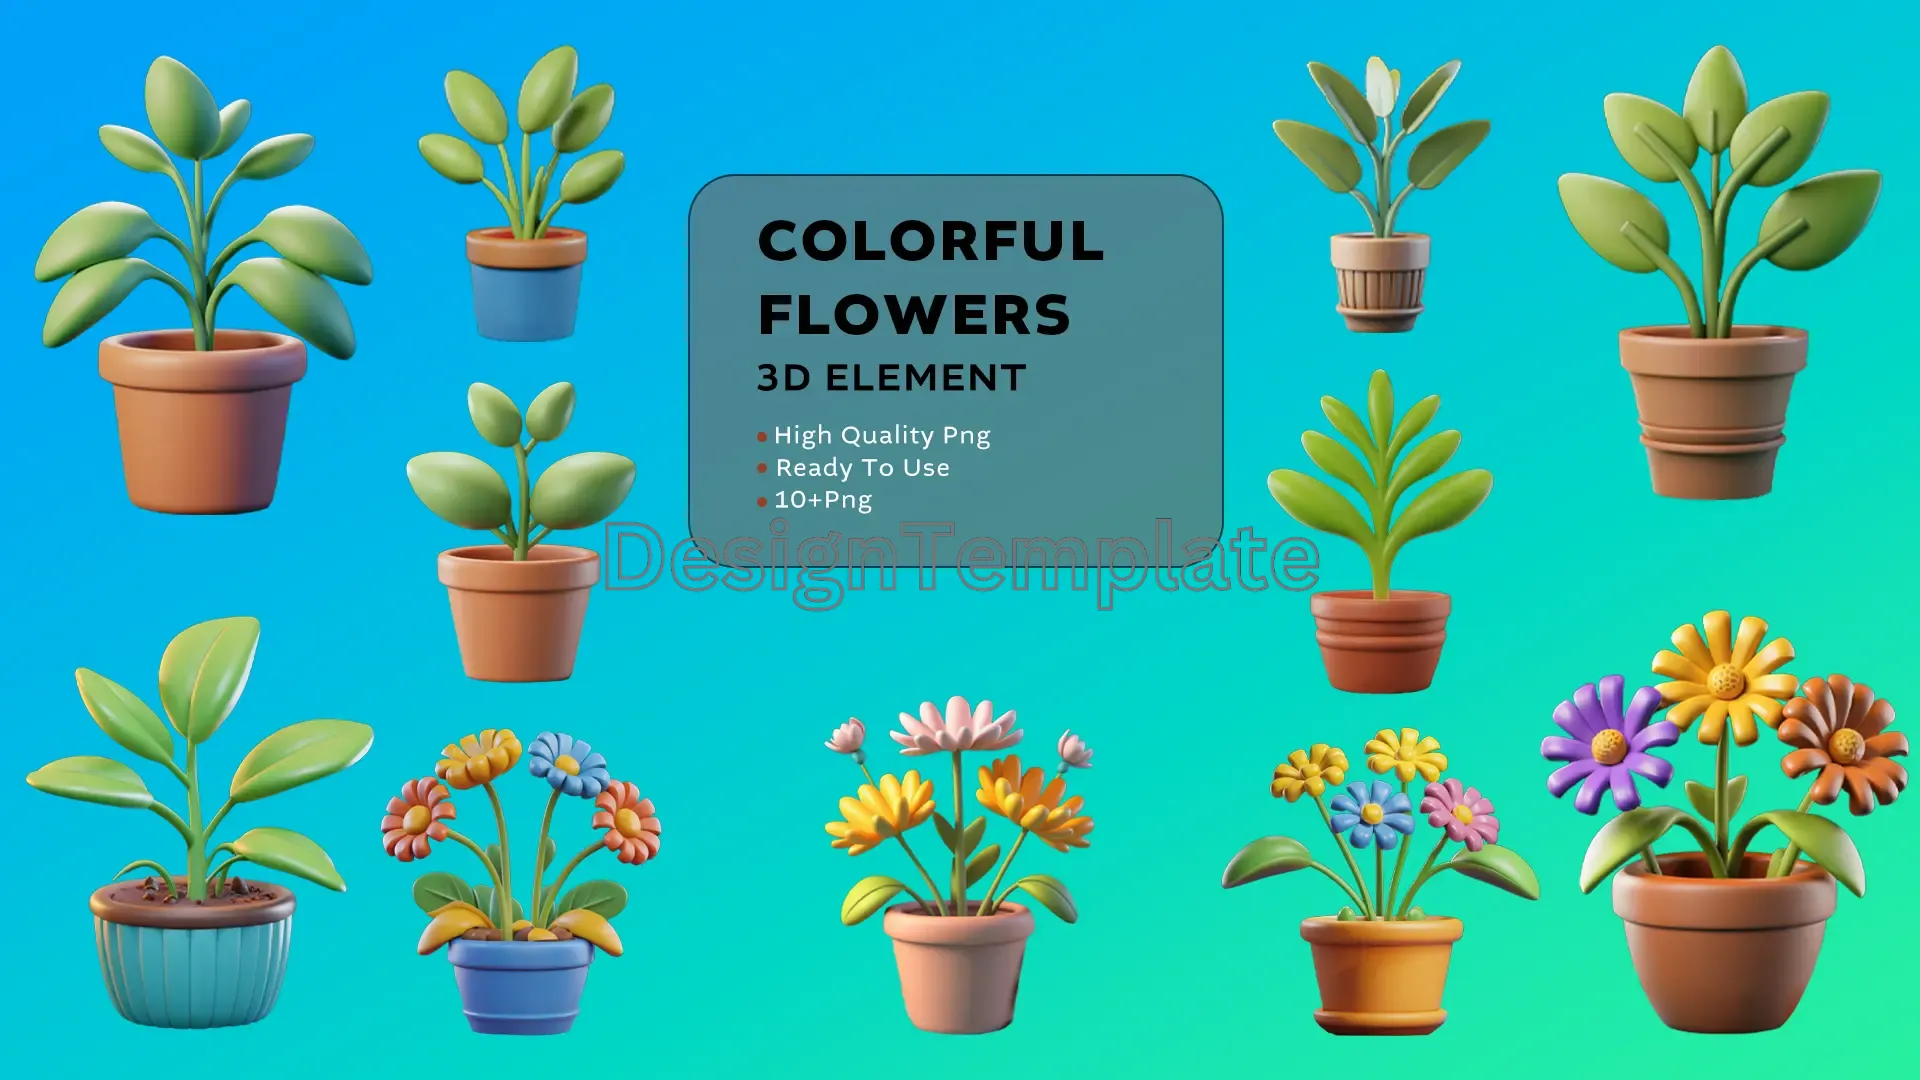 Flora Fiesta Vibrant 3D Colorful Flowers Elements Pack image